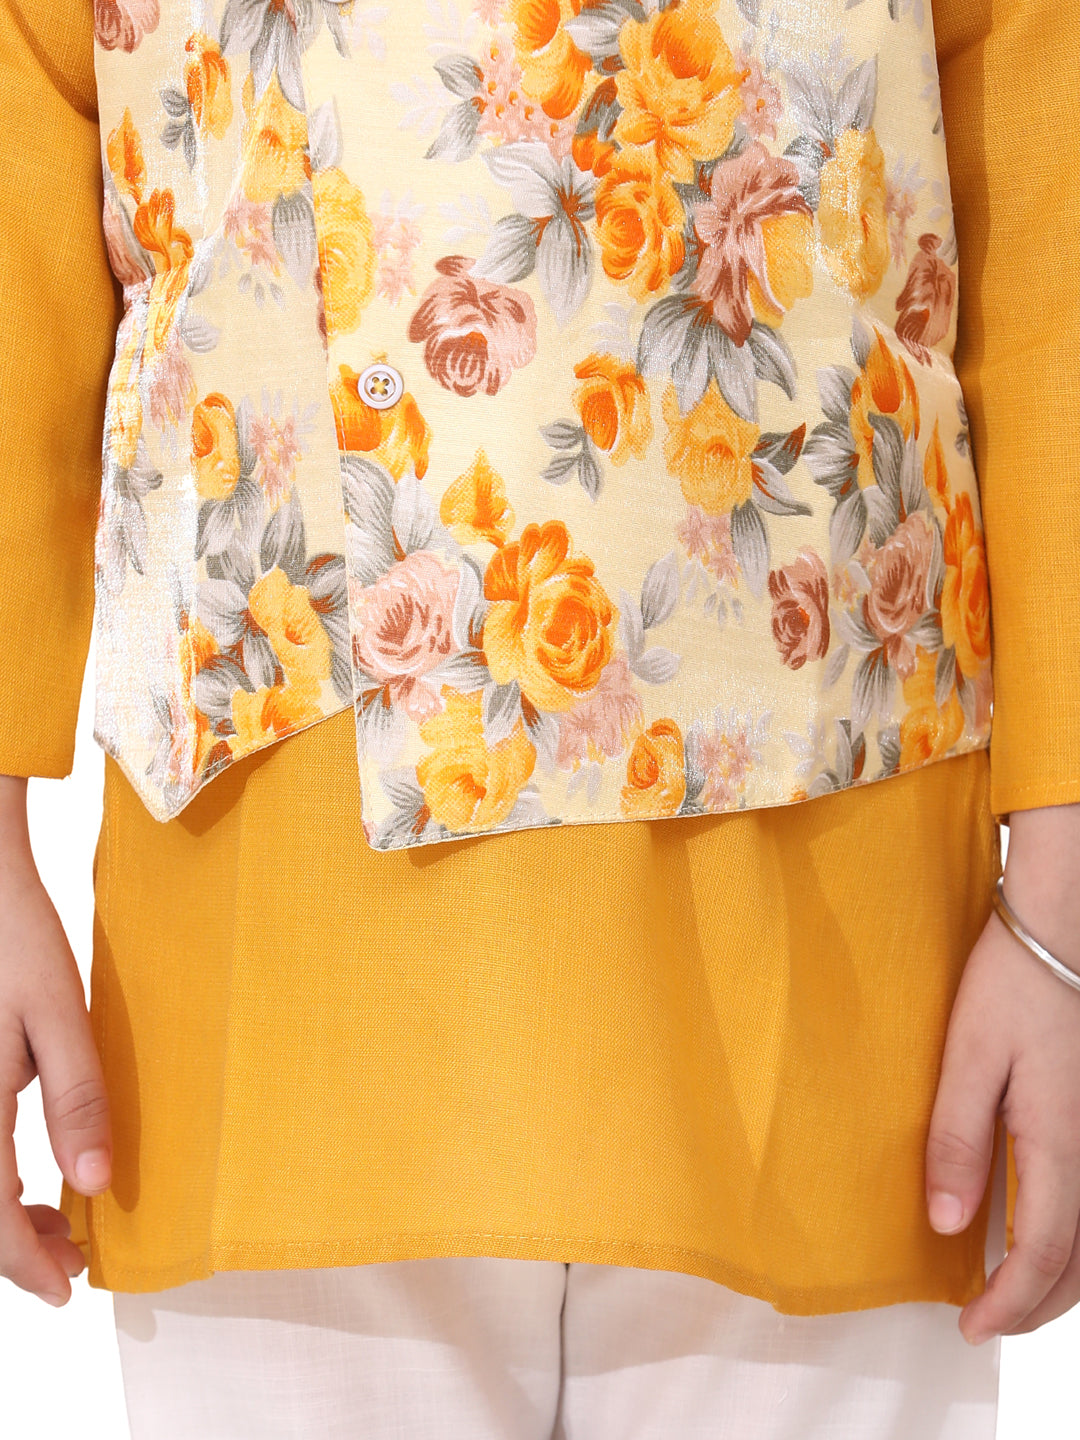 BownBee Sibling Sets  Floral Printed Attached Jacket Kurta Pajama  and Lehenga Choli With Dupatta-Yellow